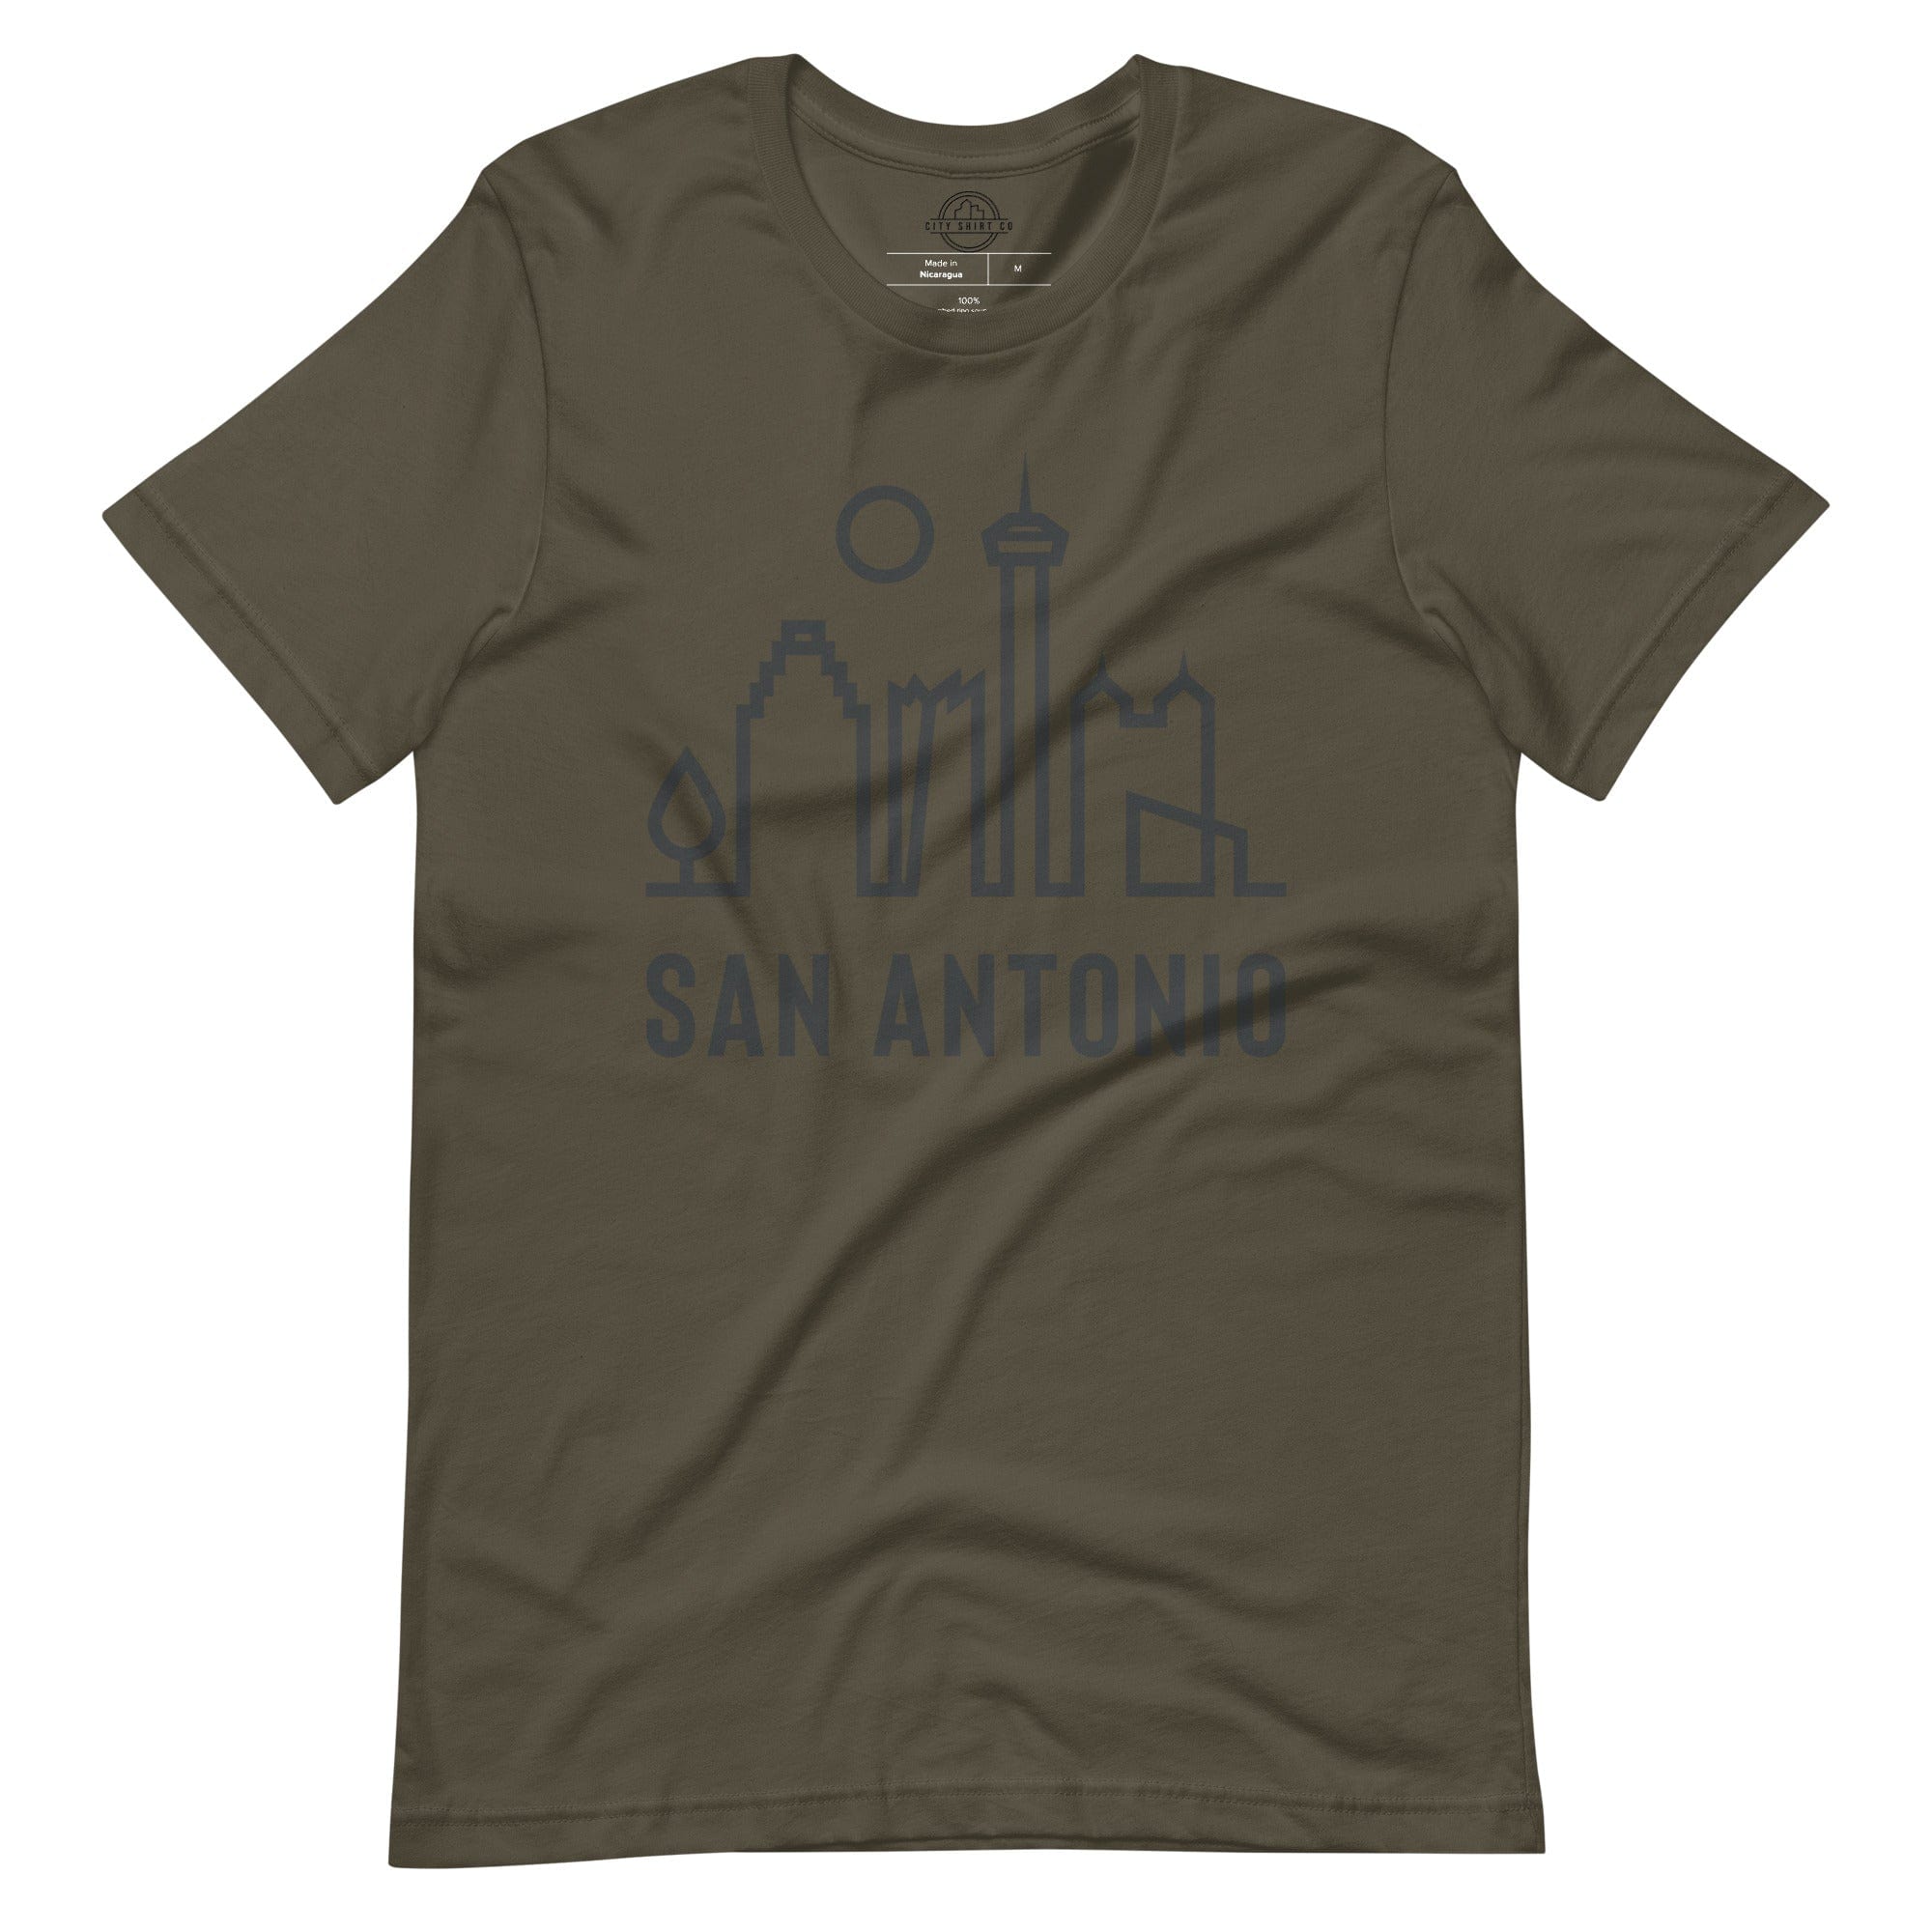 City Shirt Co San Antonio Urban Dweller Street Tee Army / S